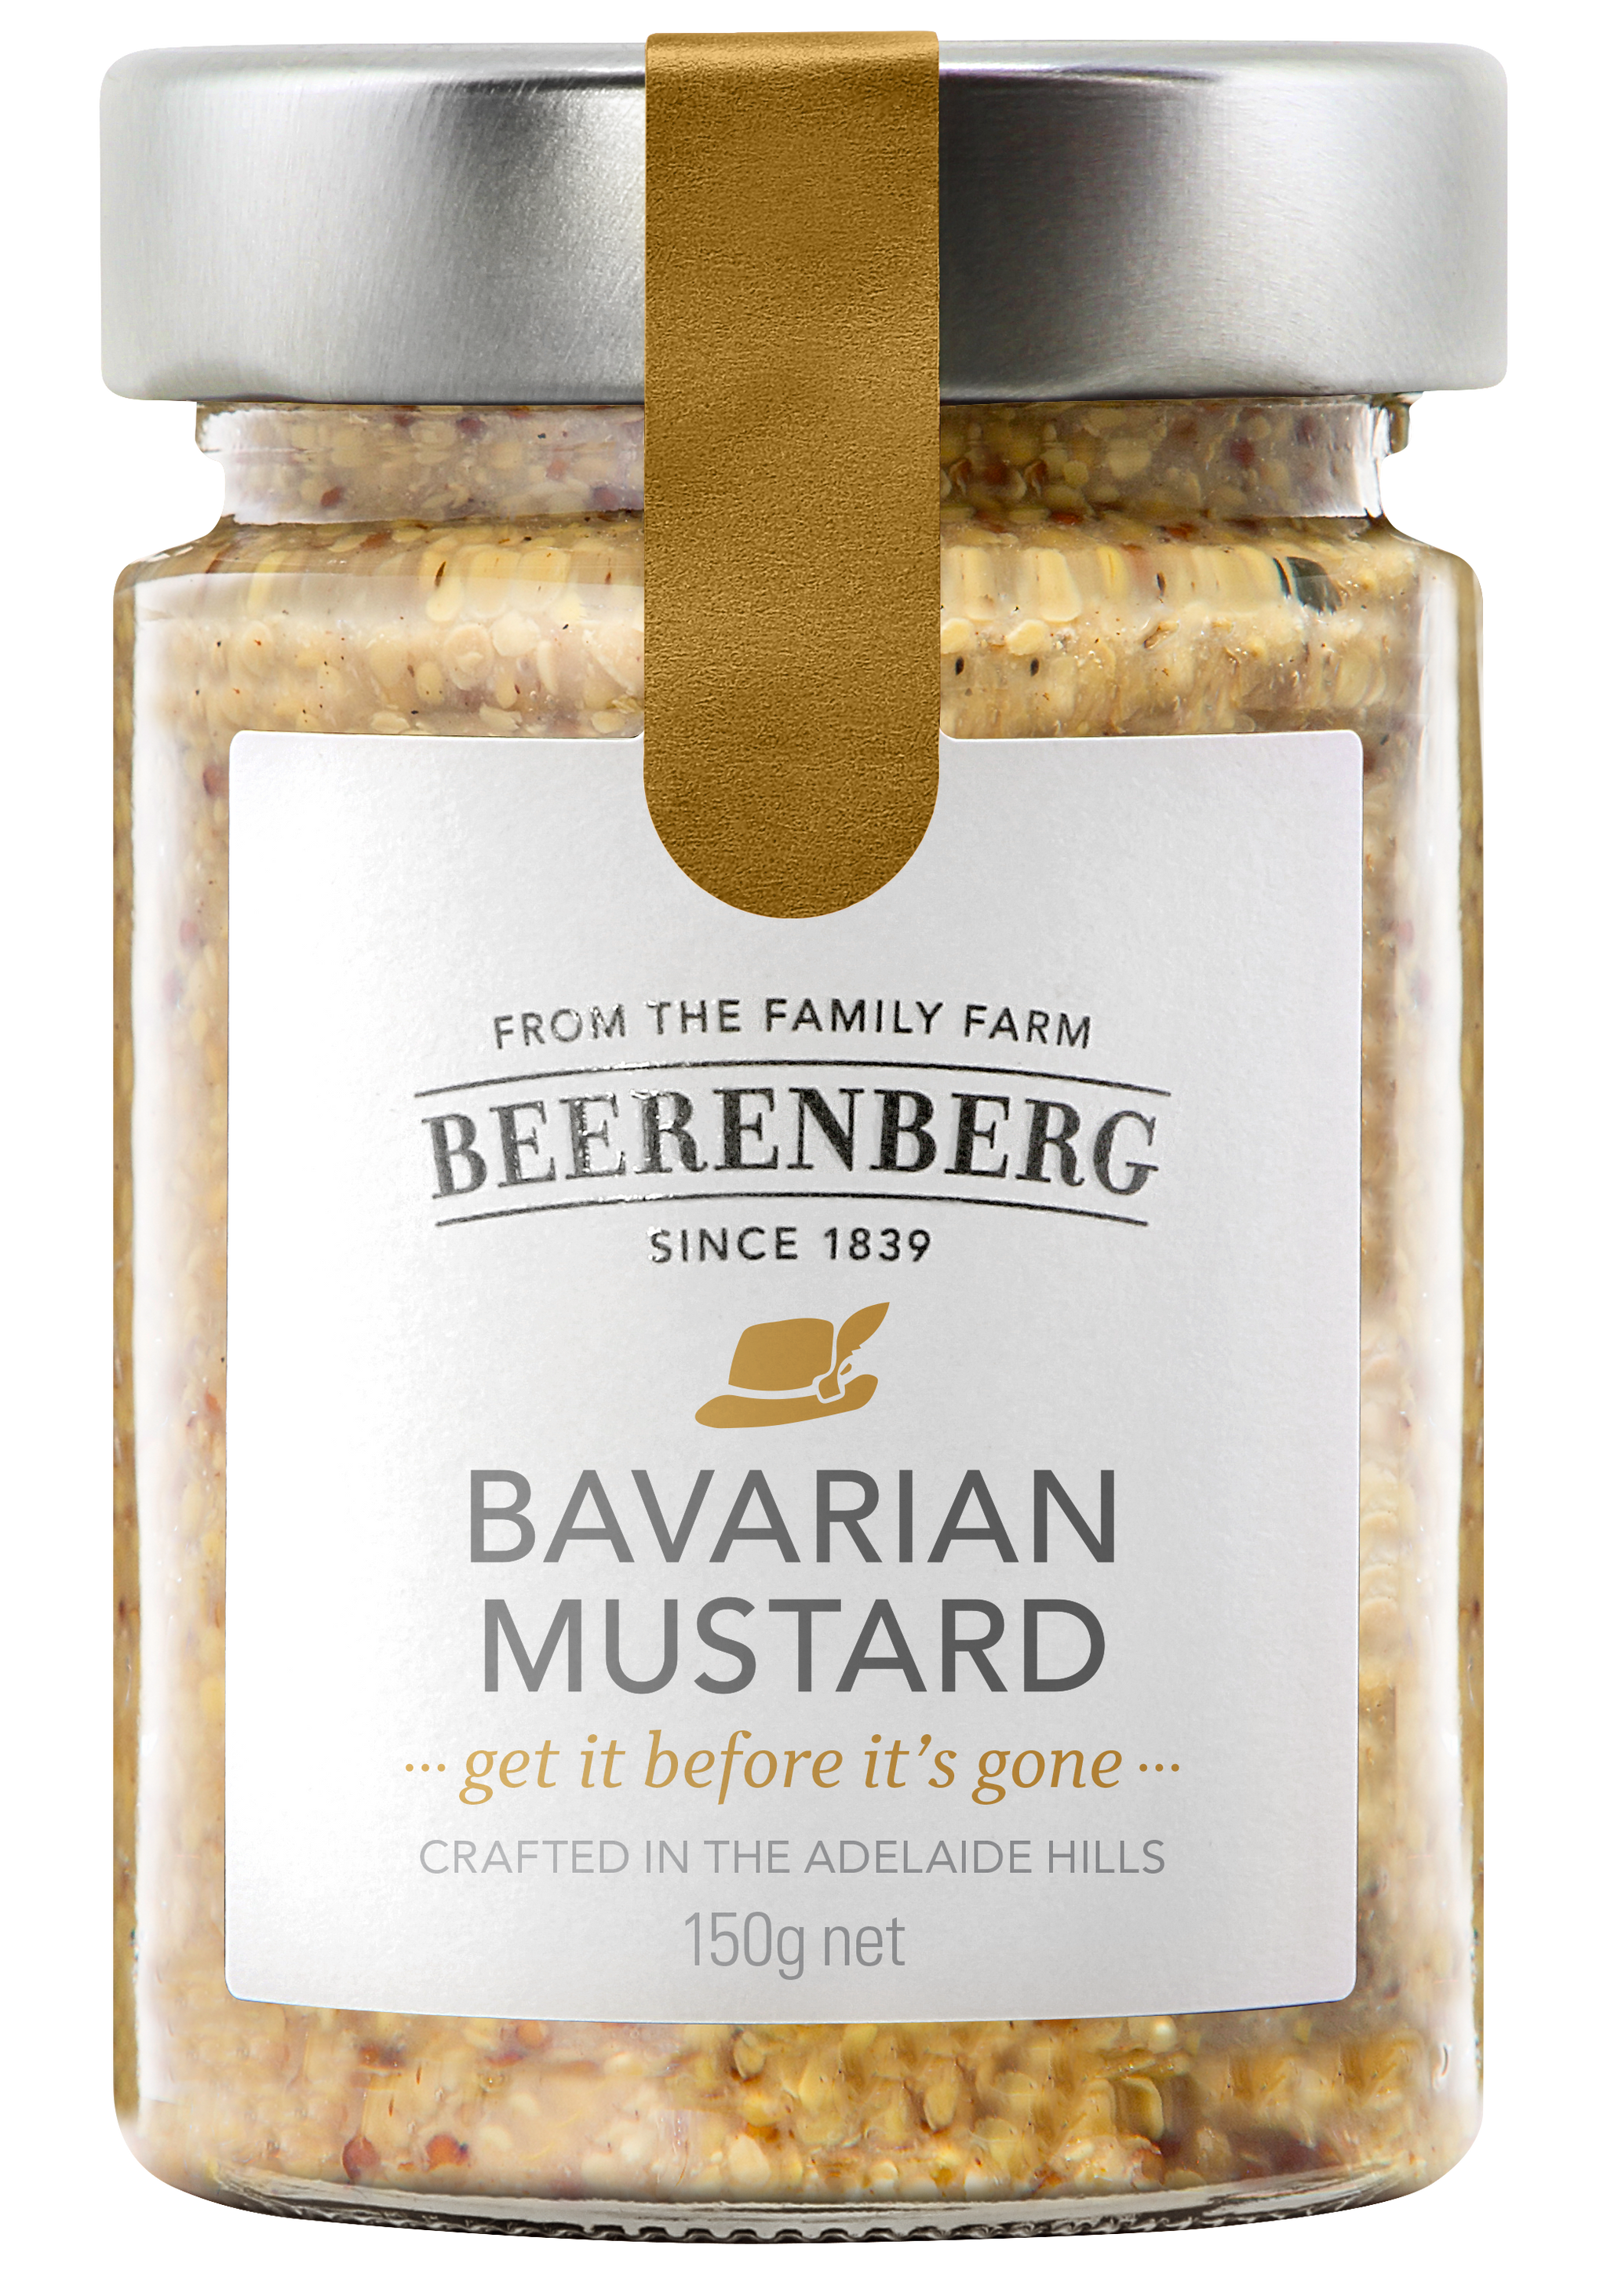 Beerenberg Bavarian Mustard